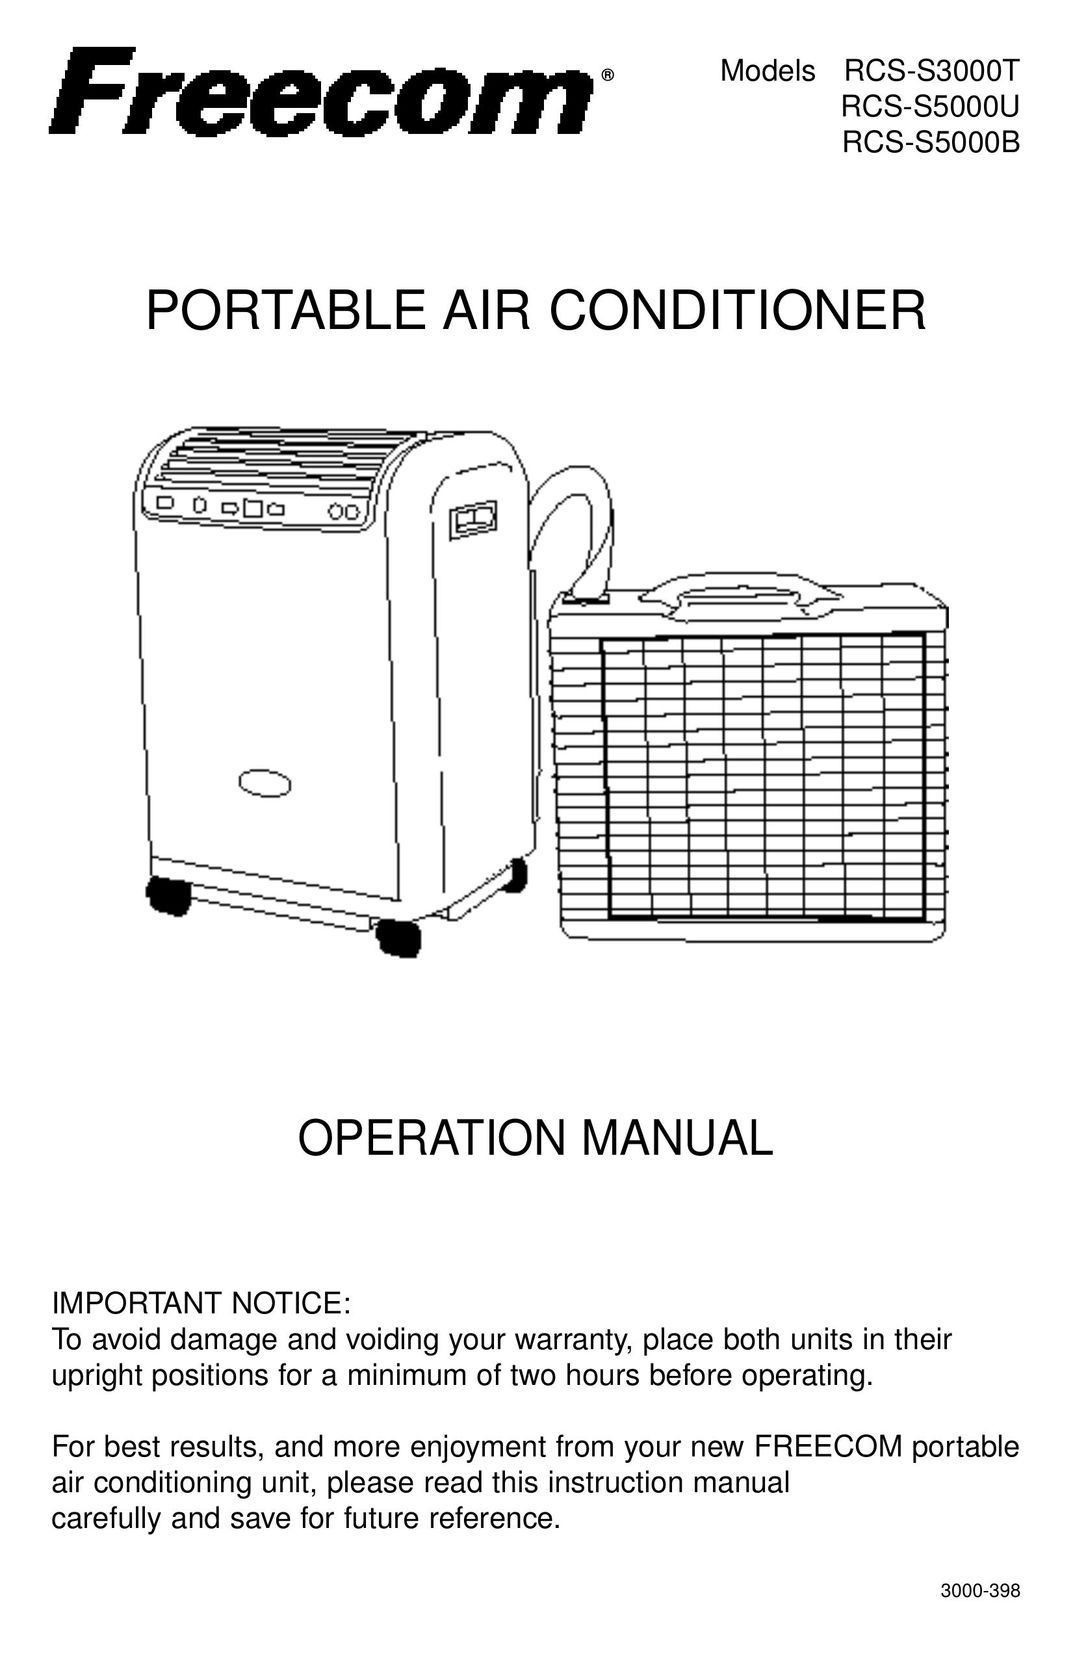 Freecom Technologies RCS-S5000U Air Conditioner User Manual